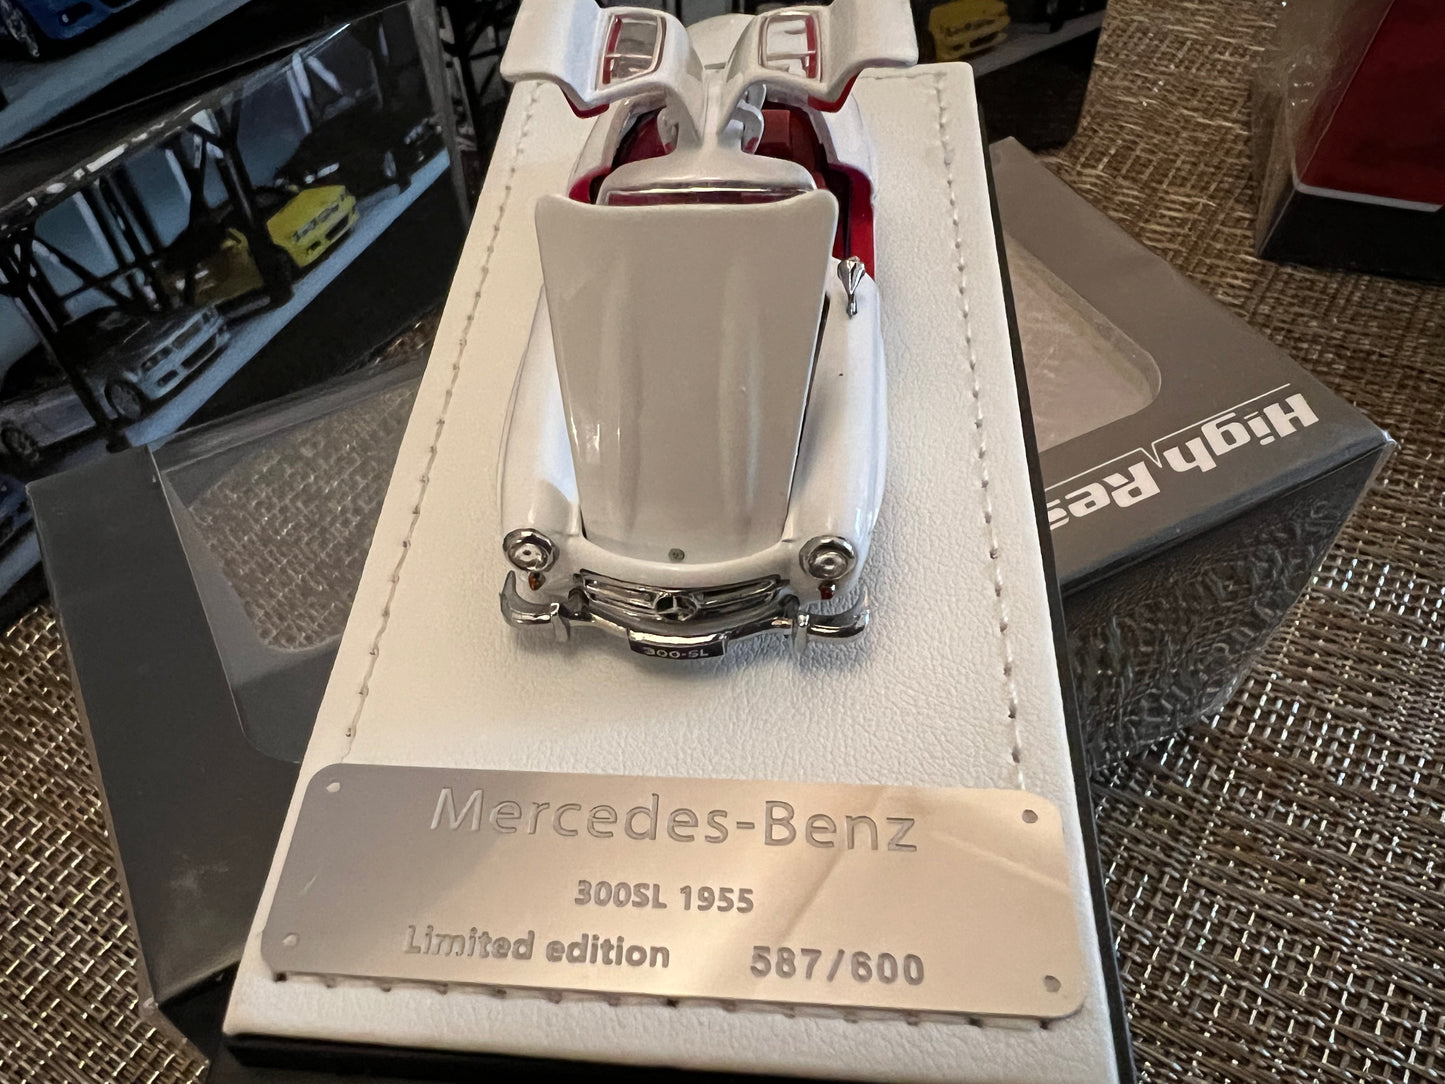 Bri scale models Mercedes 300 sl resin model